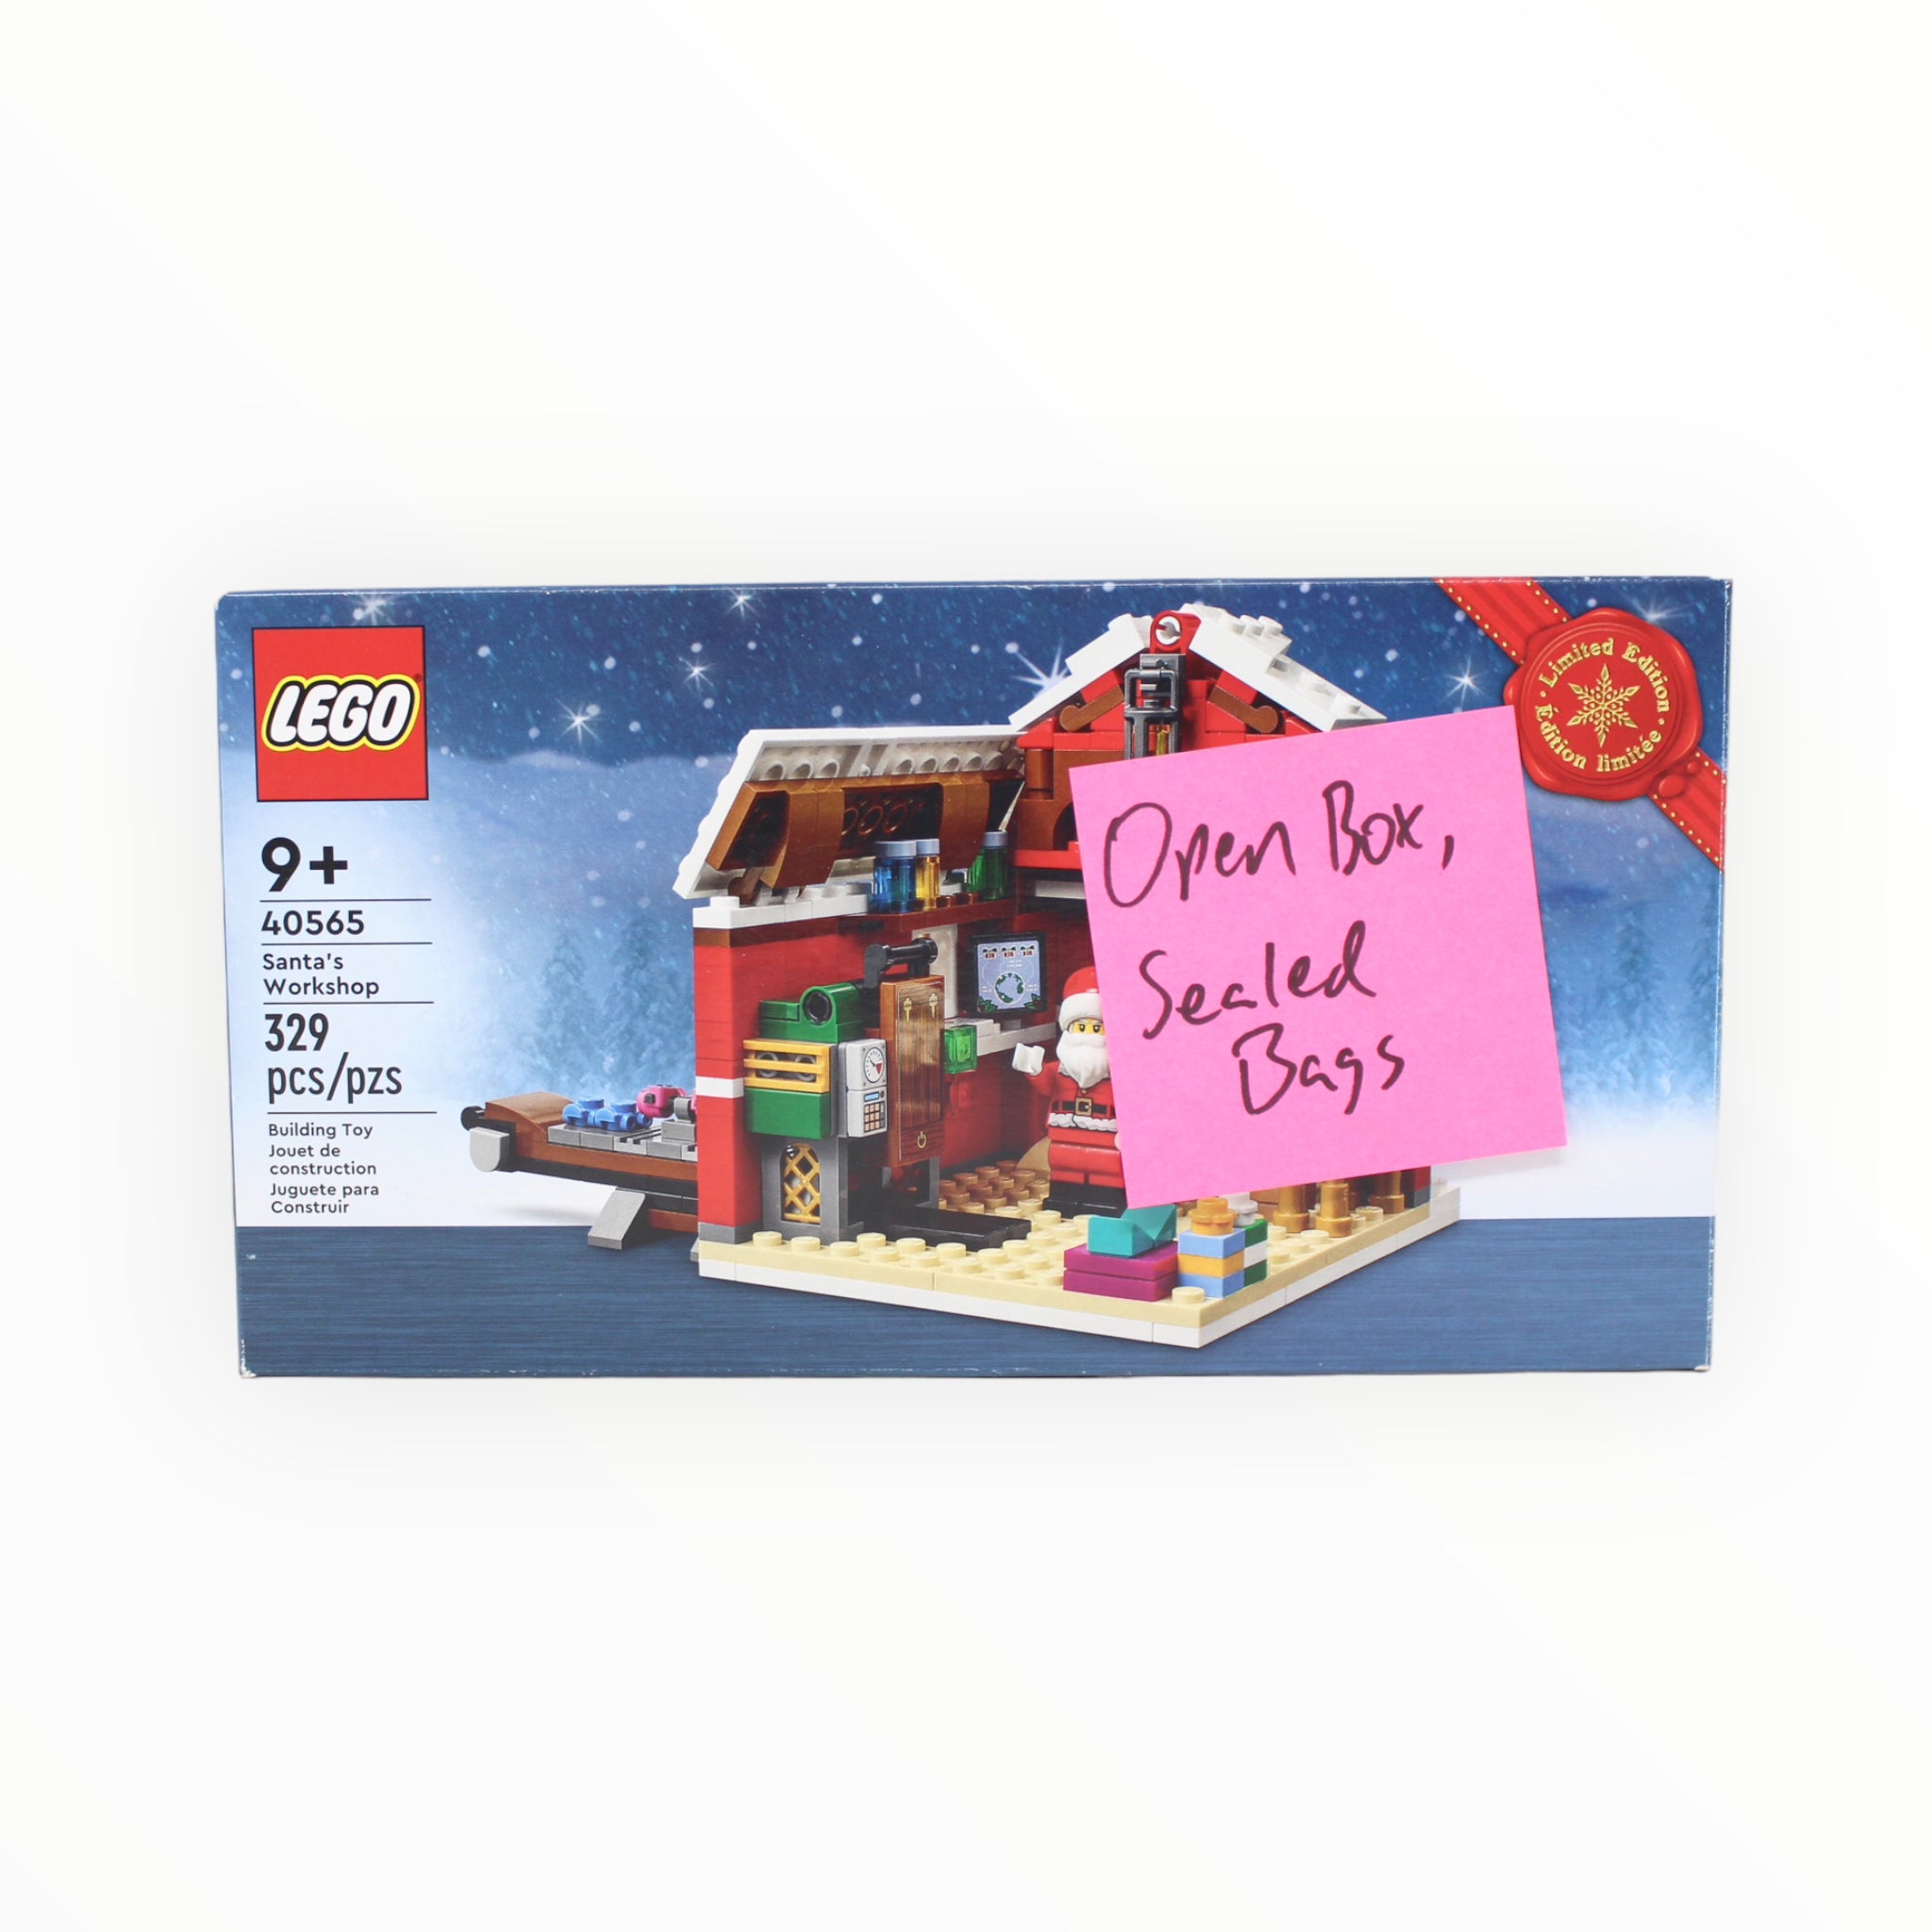 Certified Used Set 40565 LEGO Santa’s Workshop (open box, sealed bags)